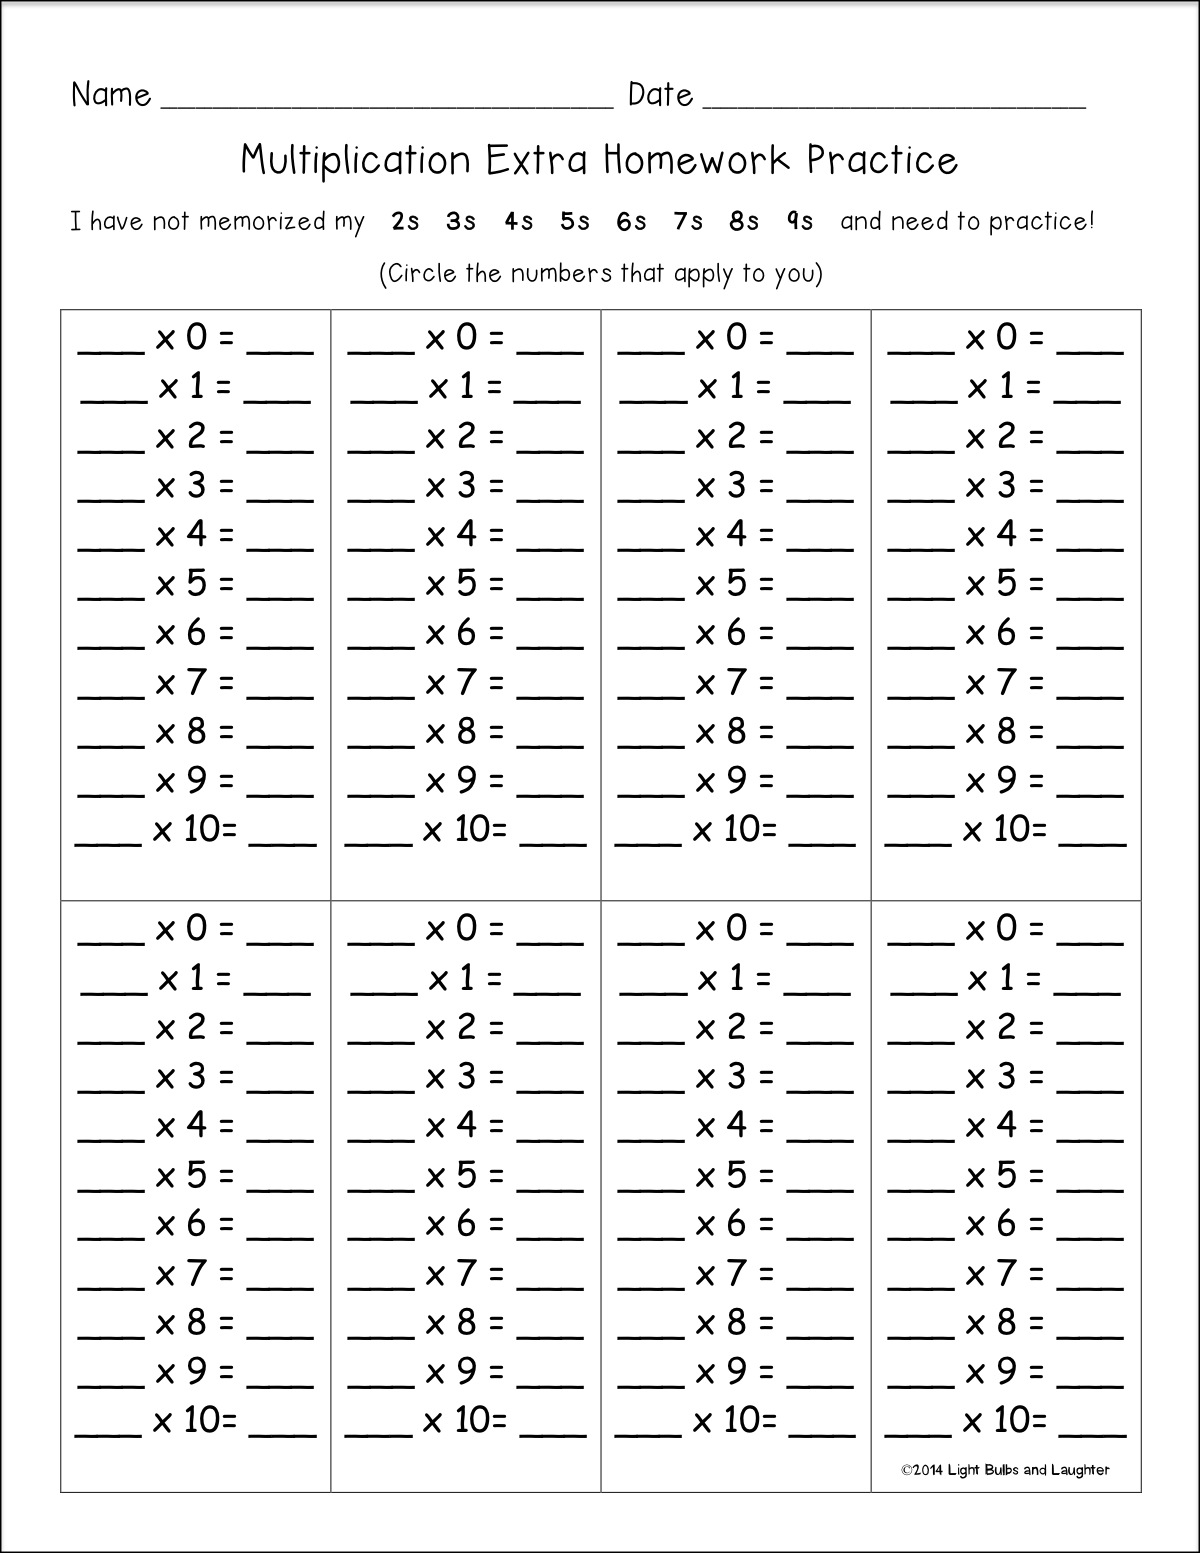 Multiplication Homework - Light Bulbs and Laughter Multiplication Tool Kit